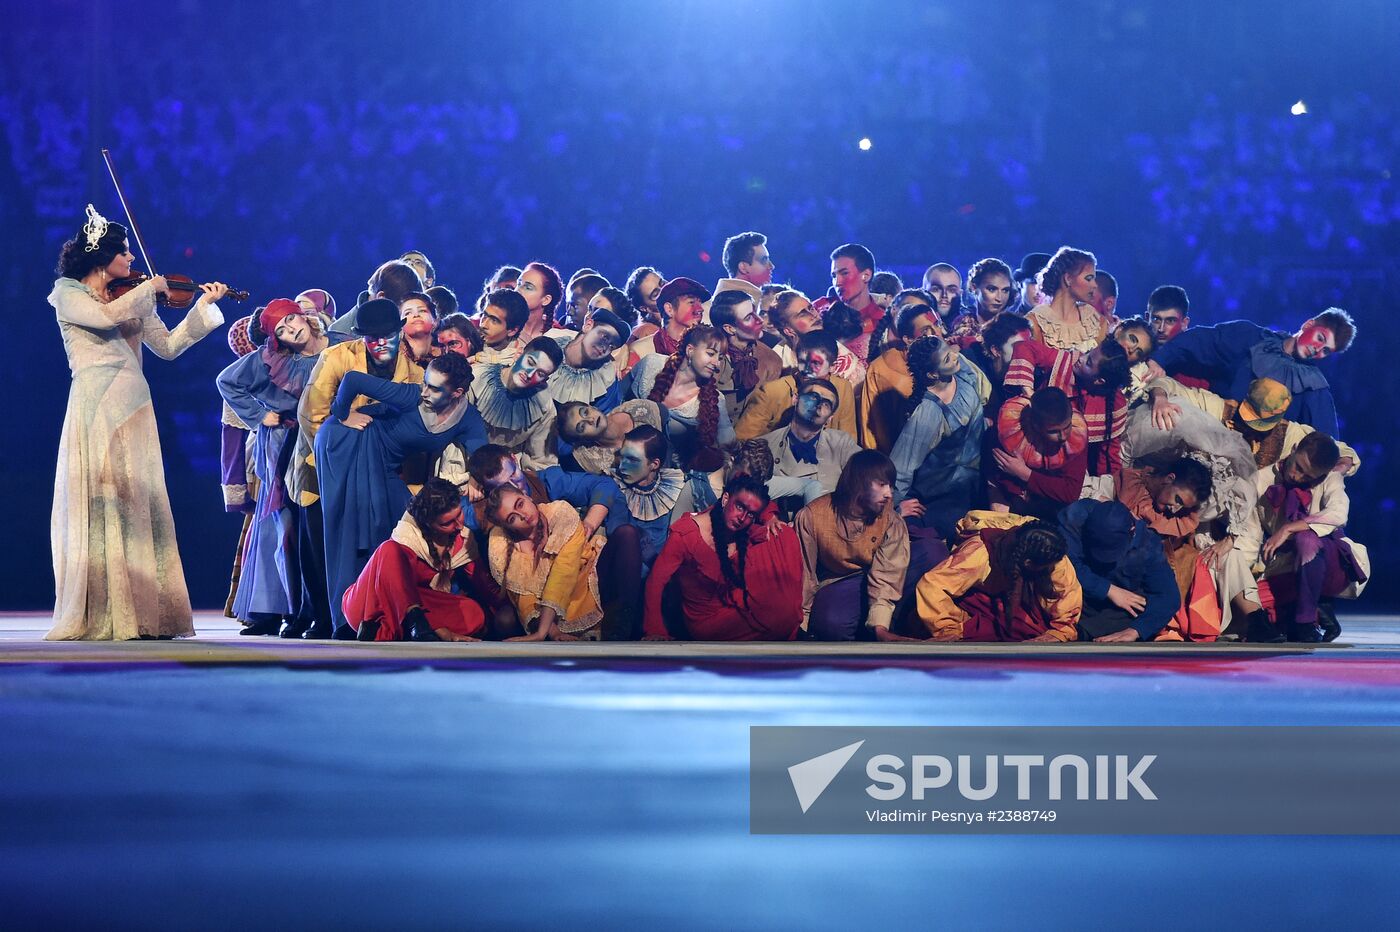 2014 Winter Olympics. Closing ceremony